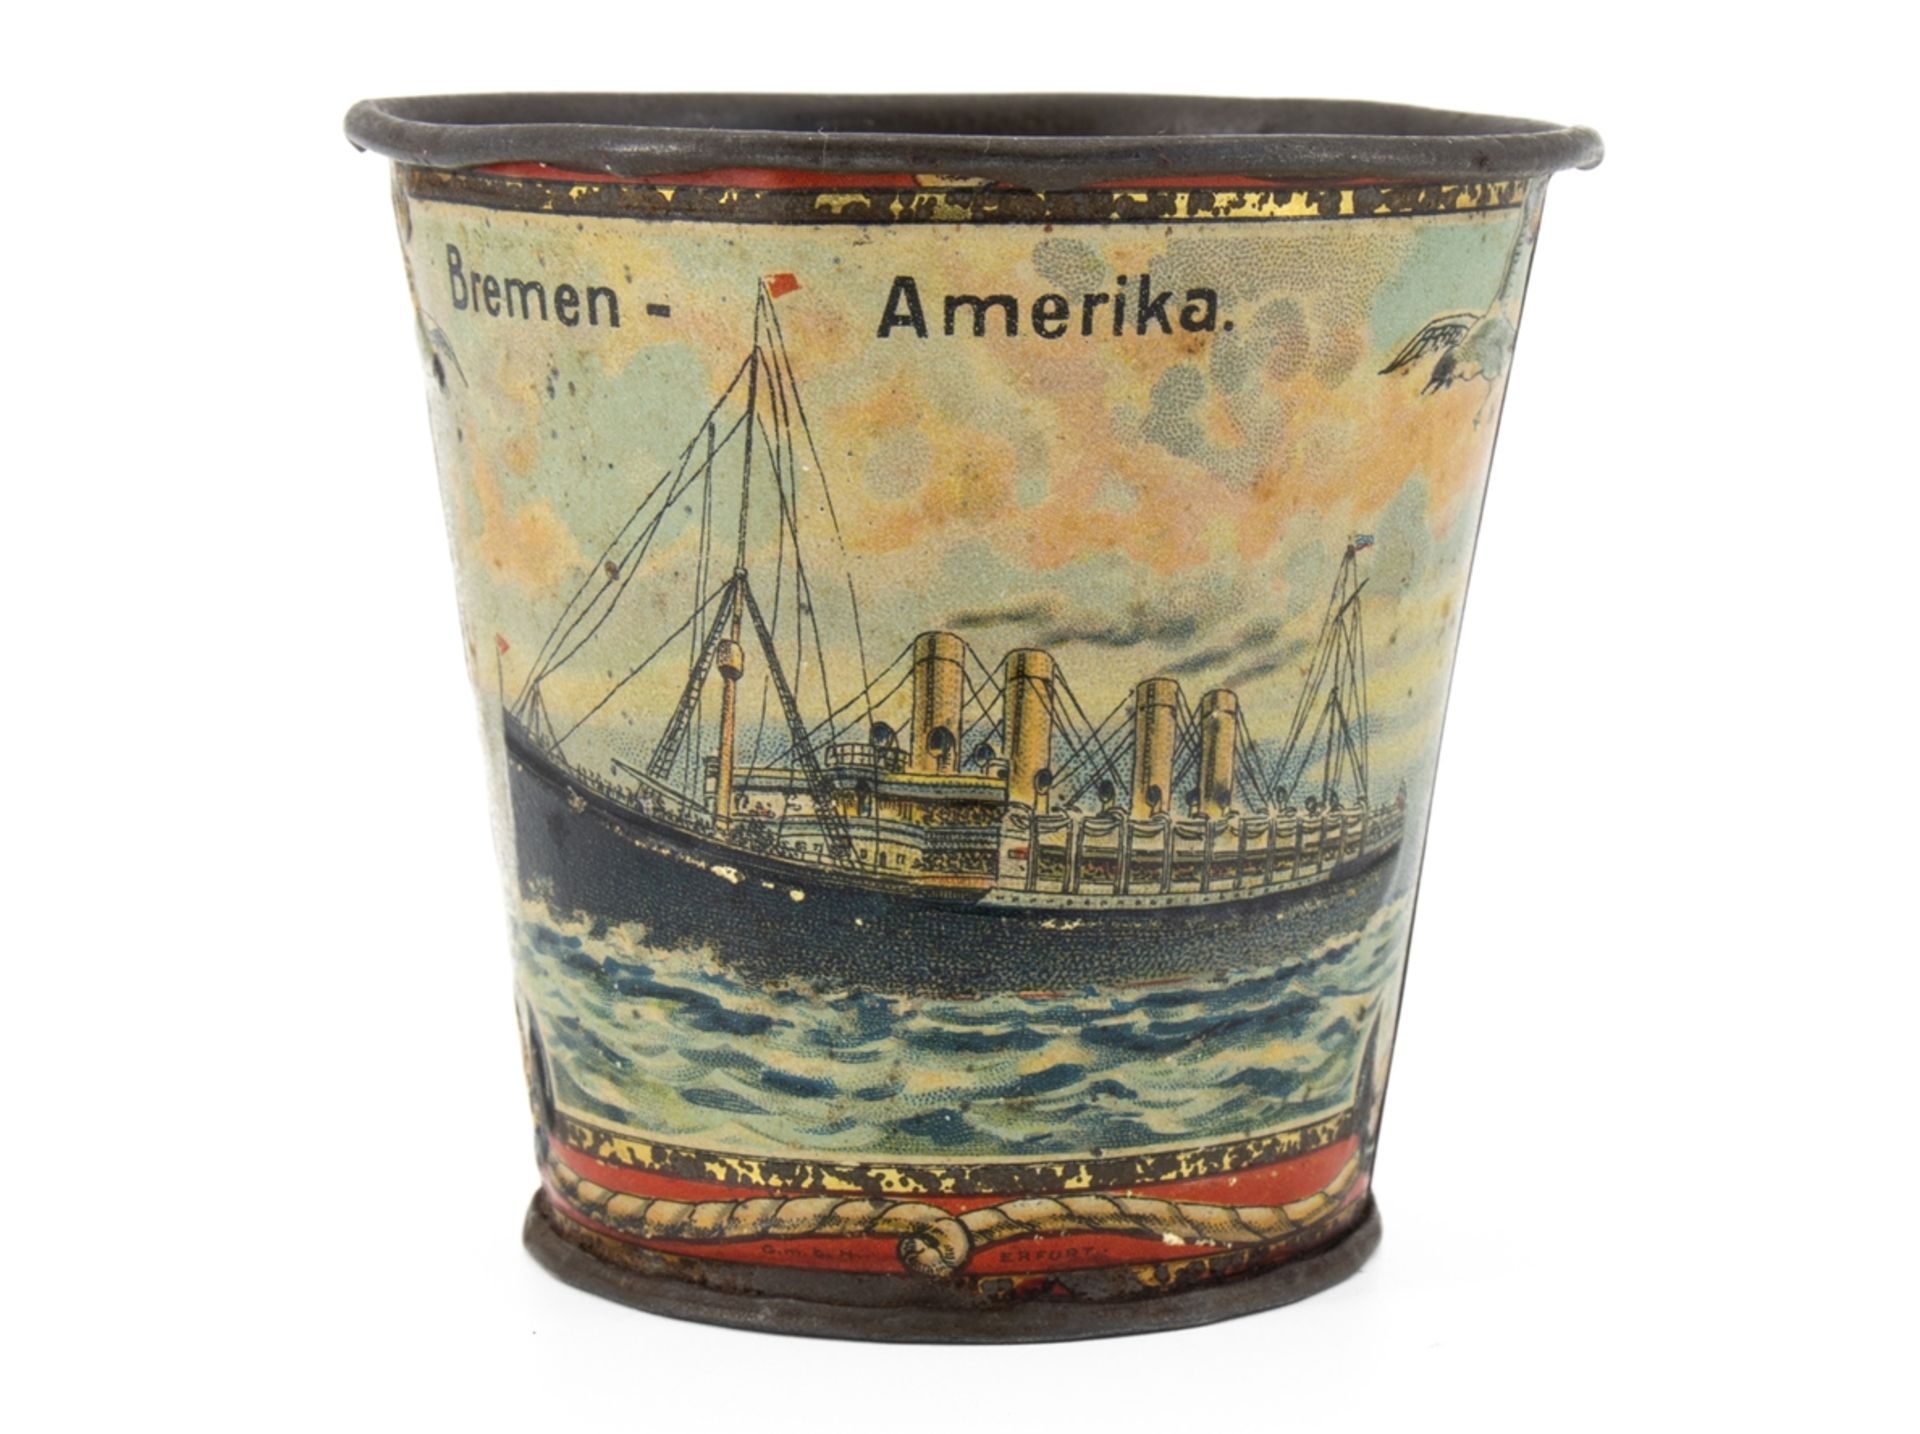 Mug Bremen-Amerika Linie, Art Nouveau, around 1900